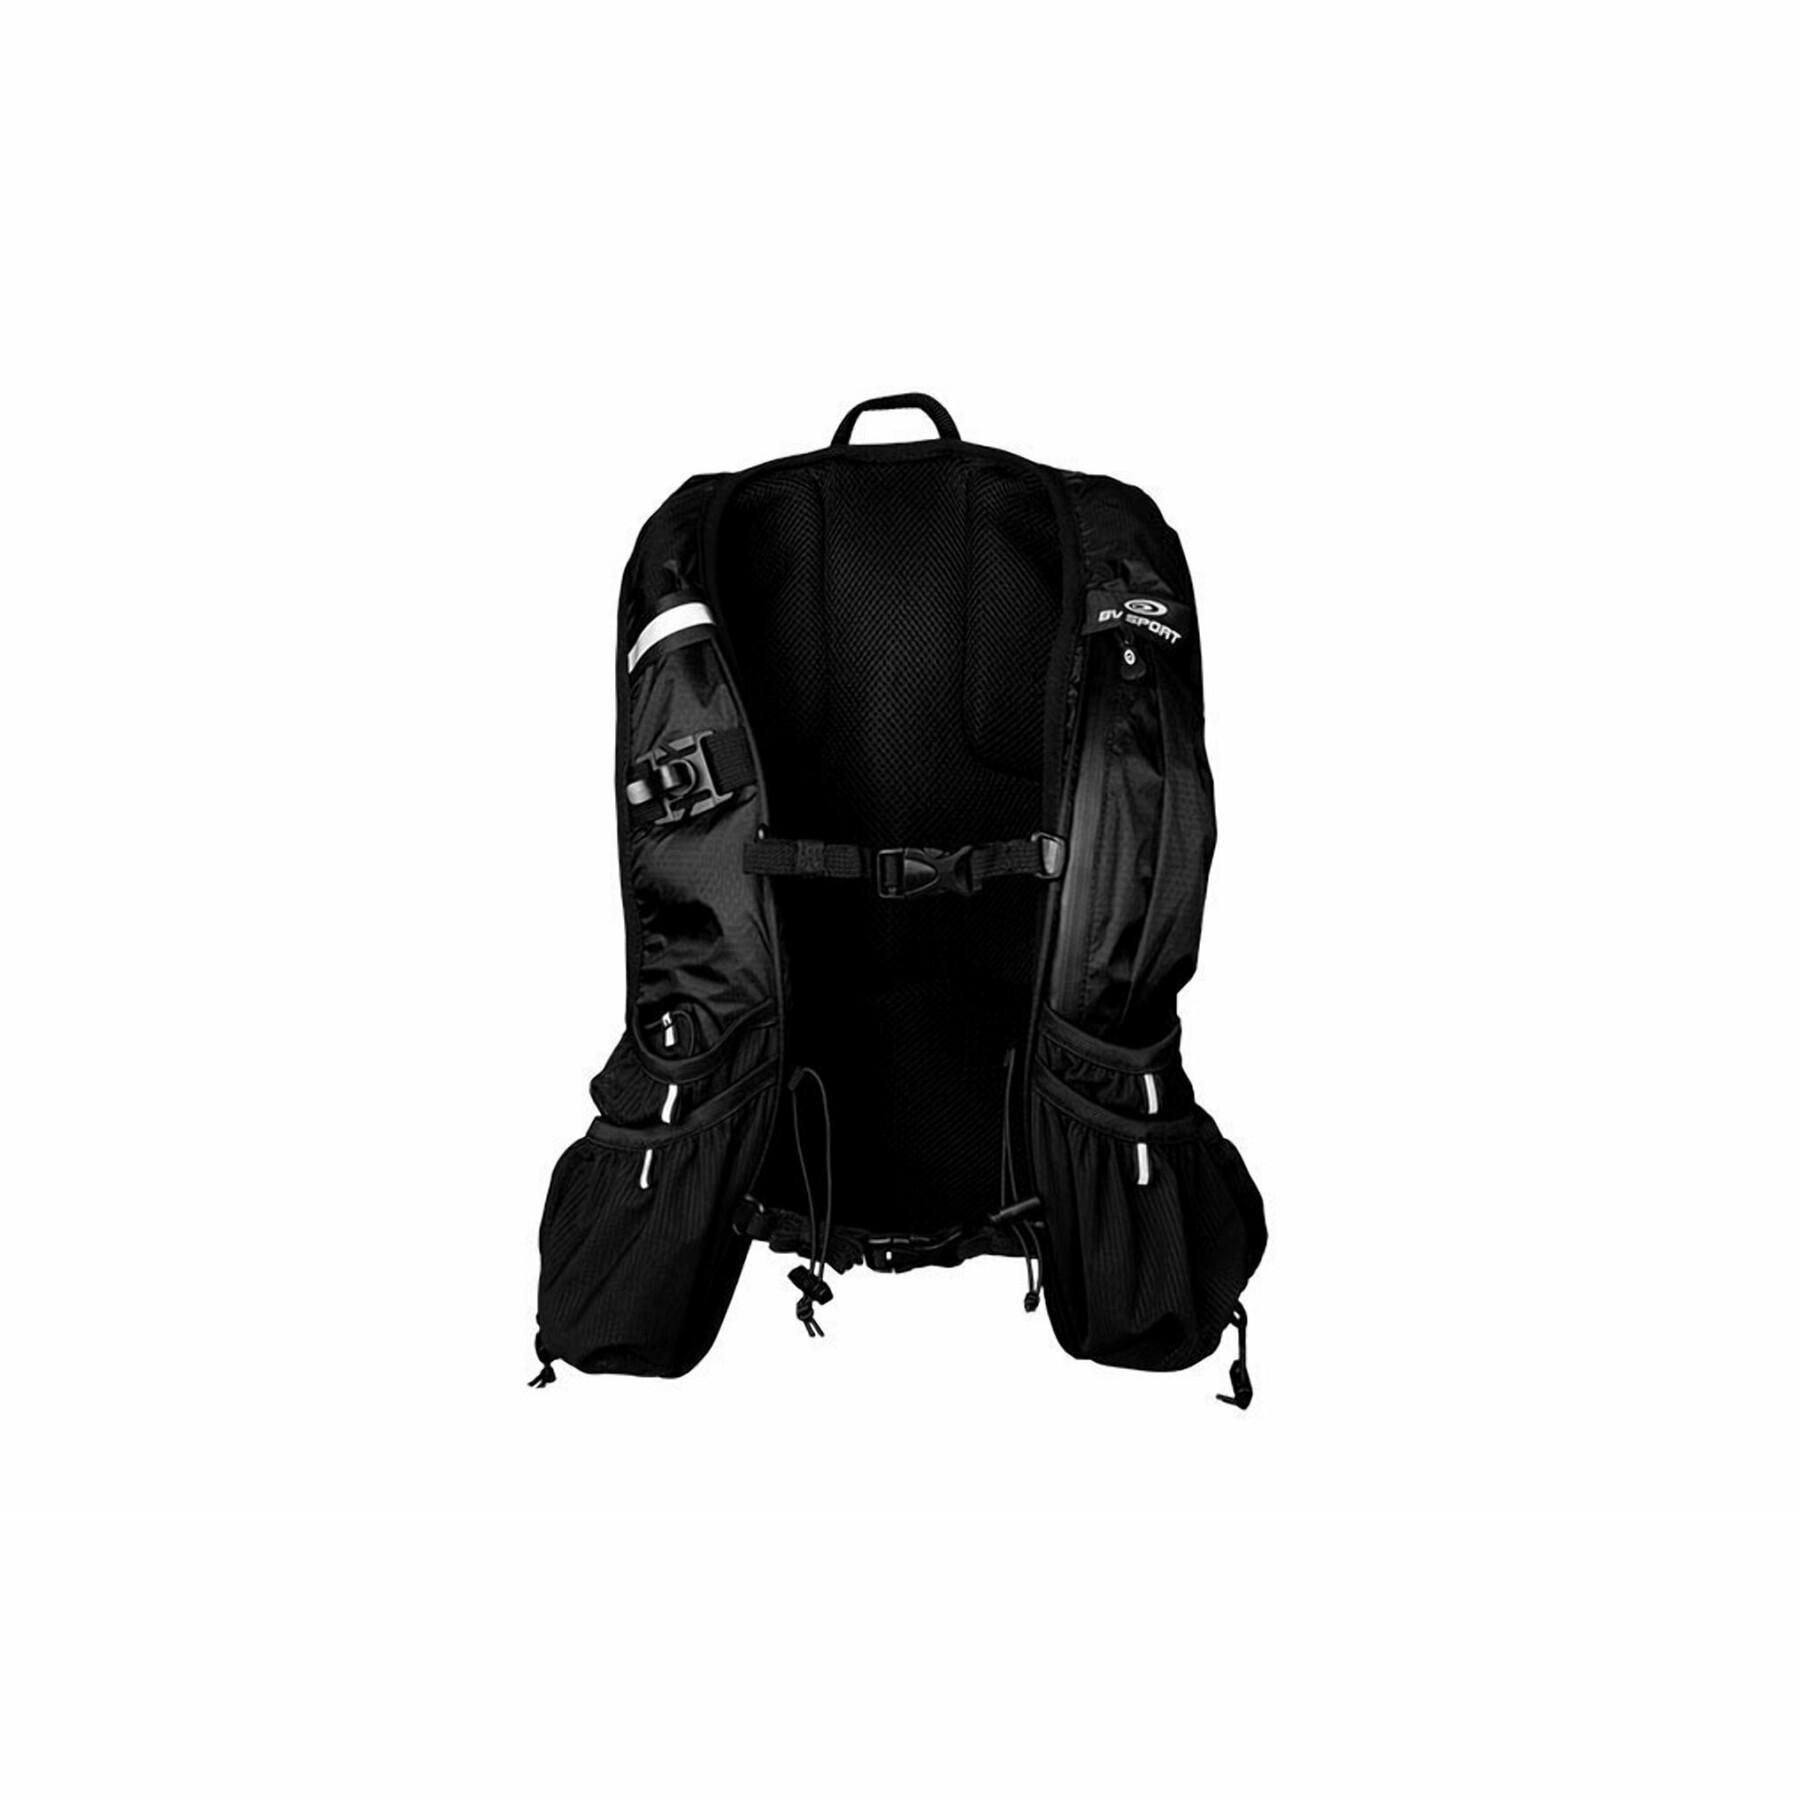 Backpack BV Sport